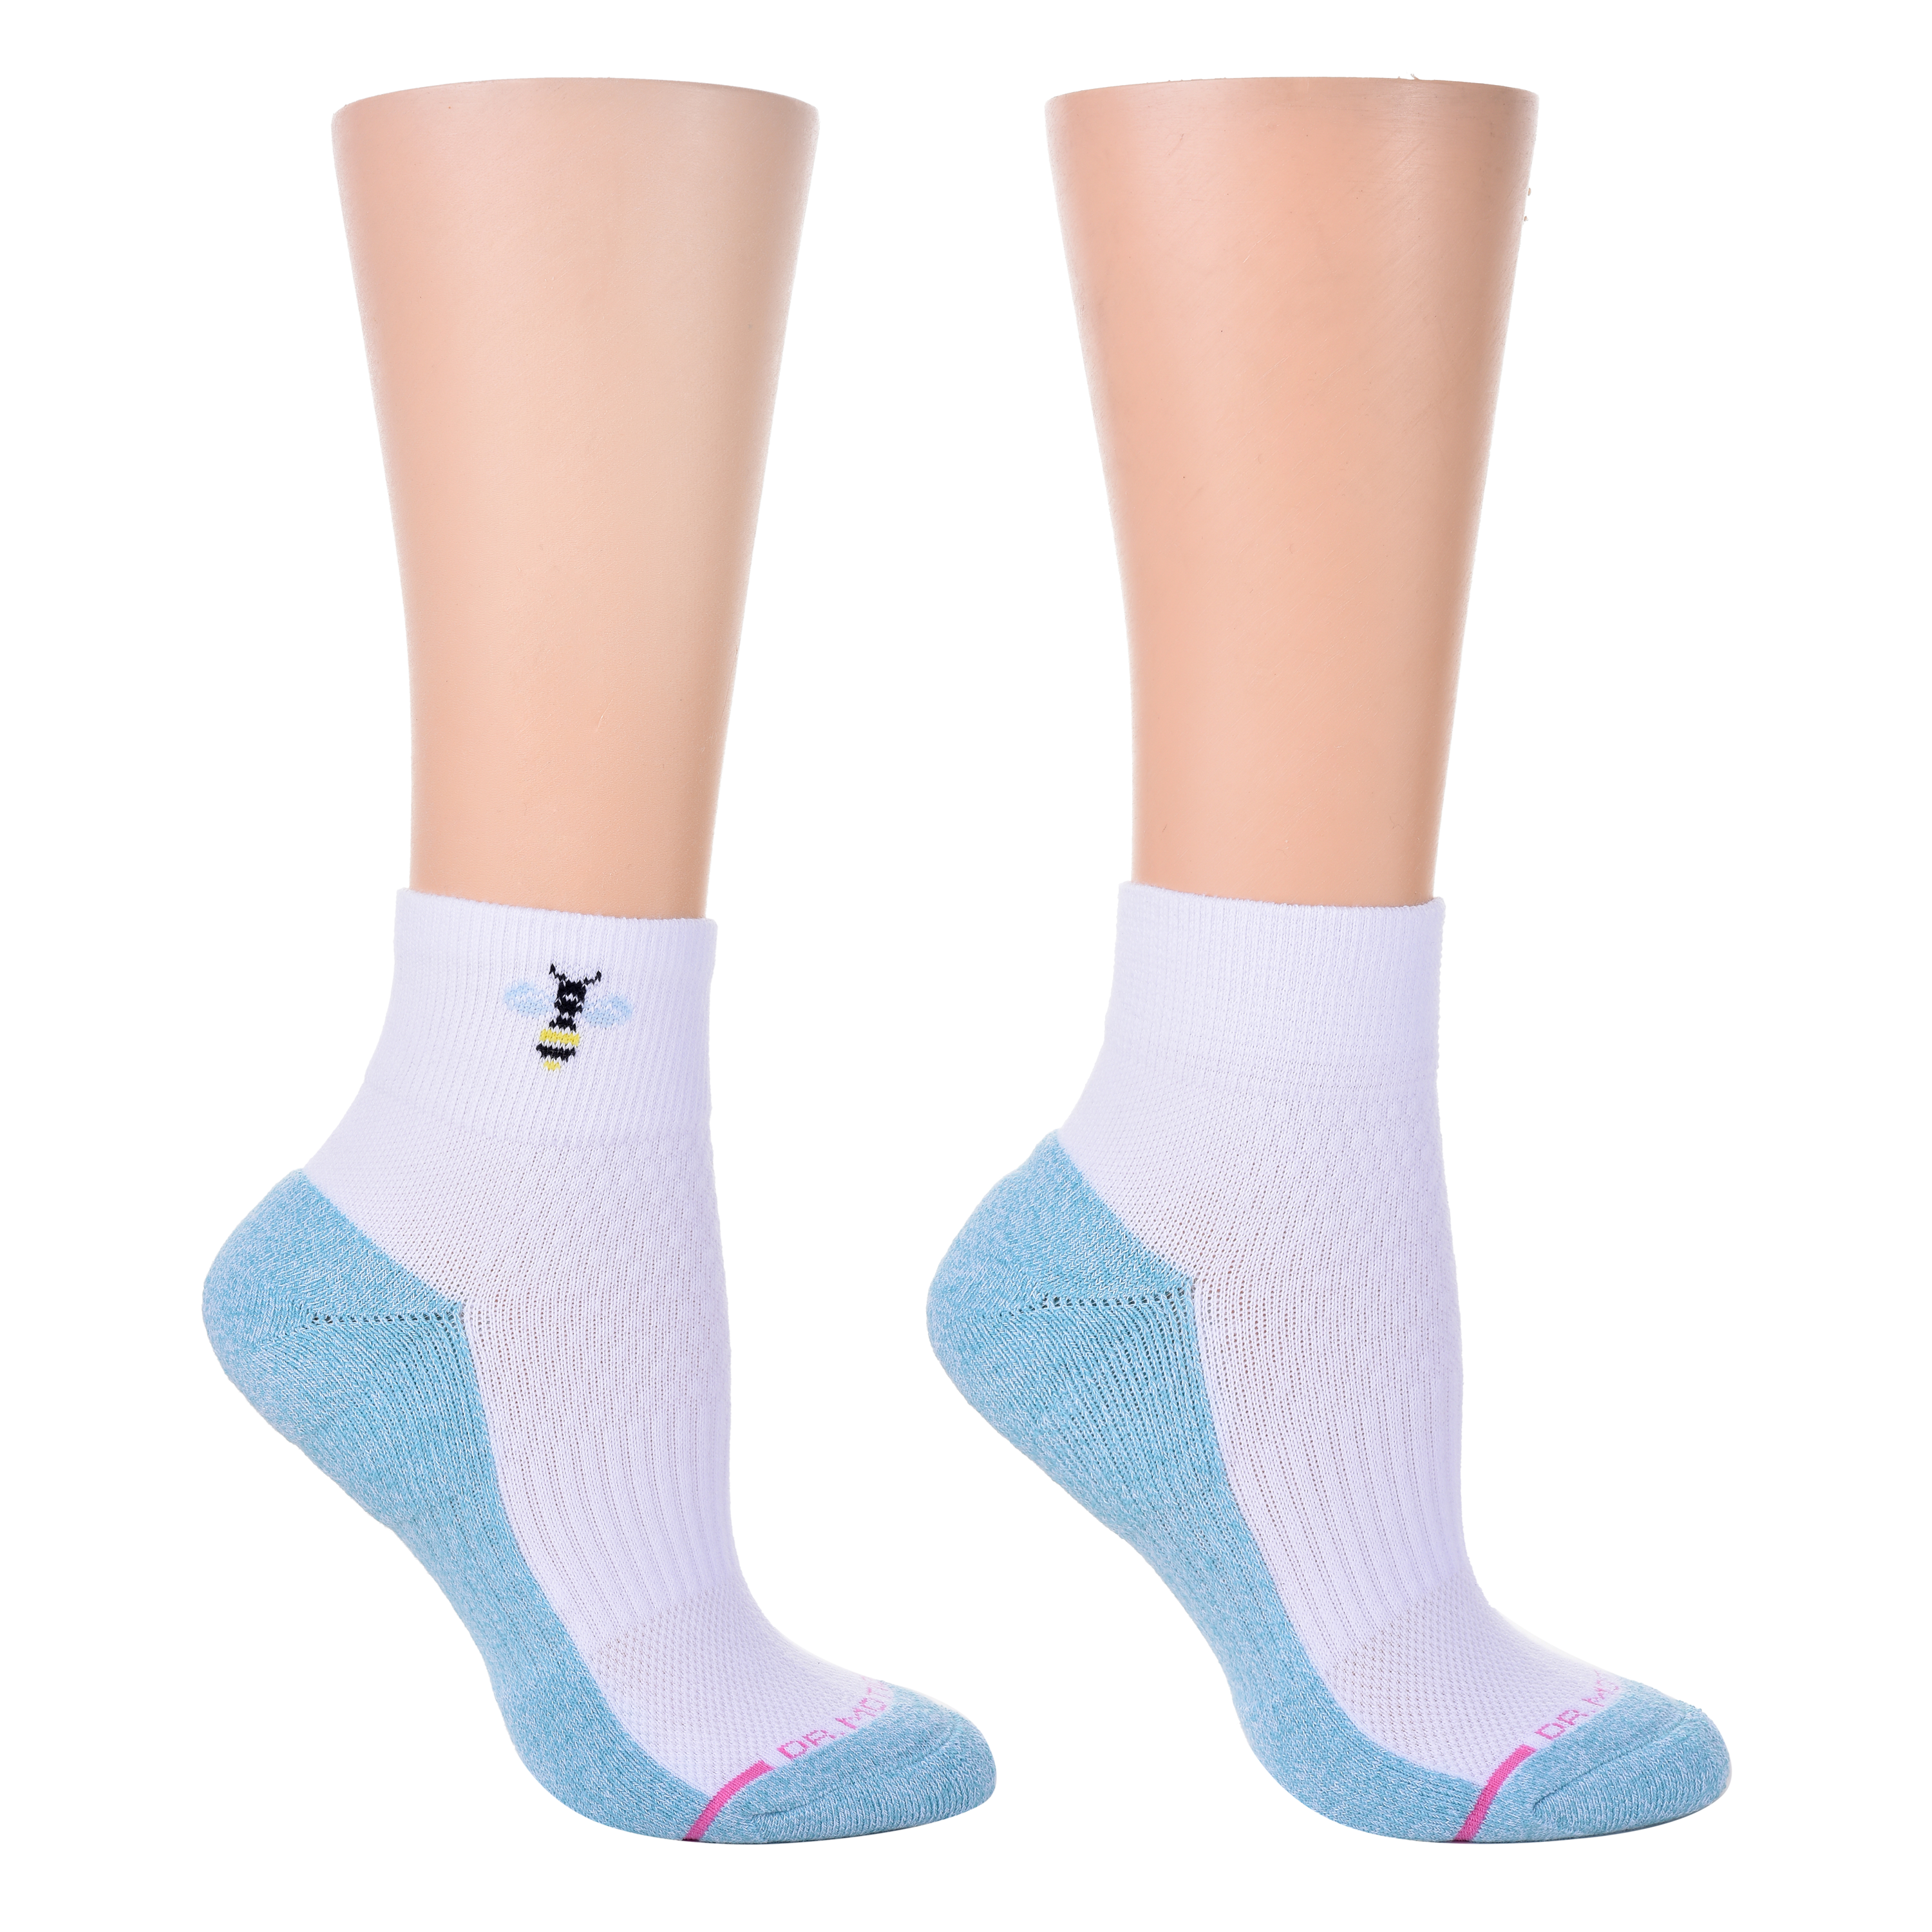 Bee | Quarter Compression Socks For Women